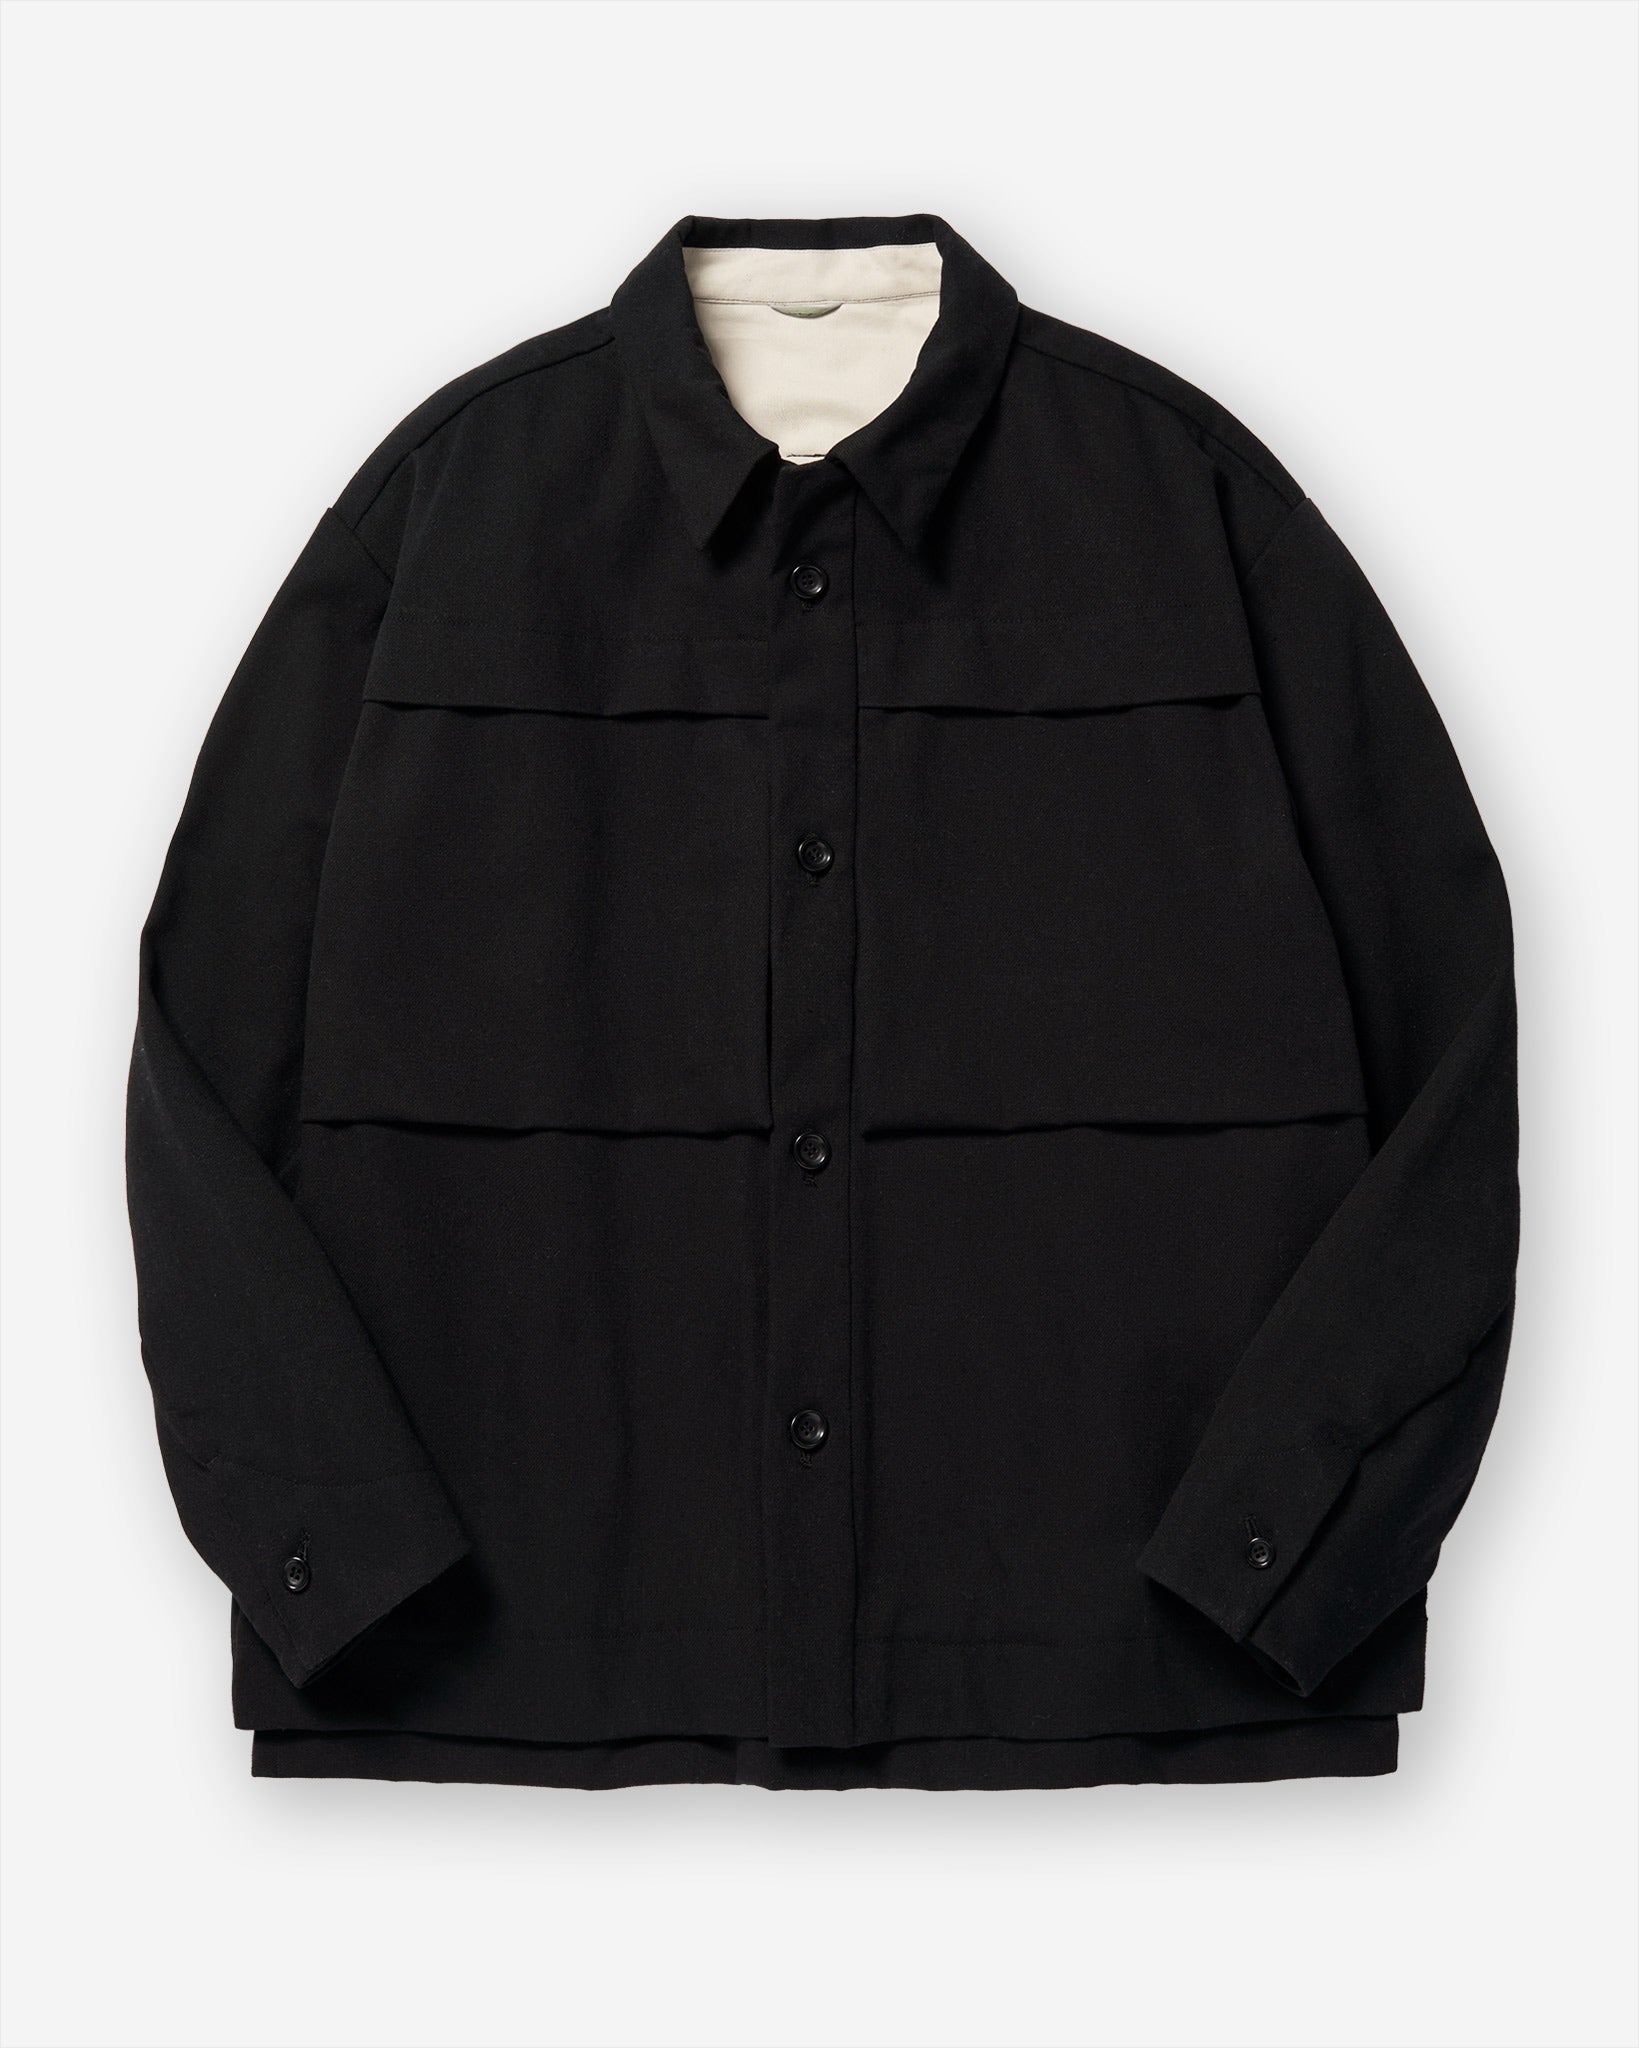 Wool Shirt Jacket (JK-LB14) - Black